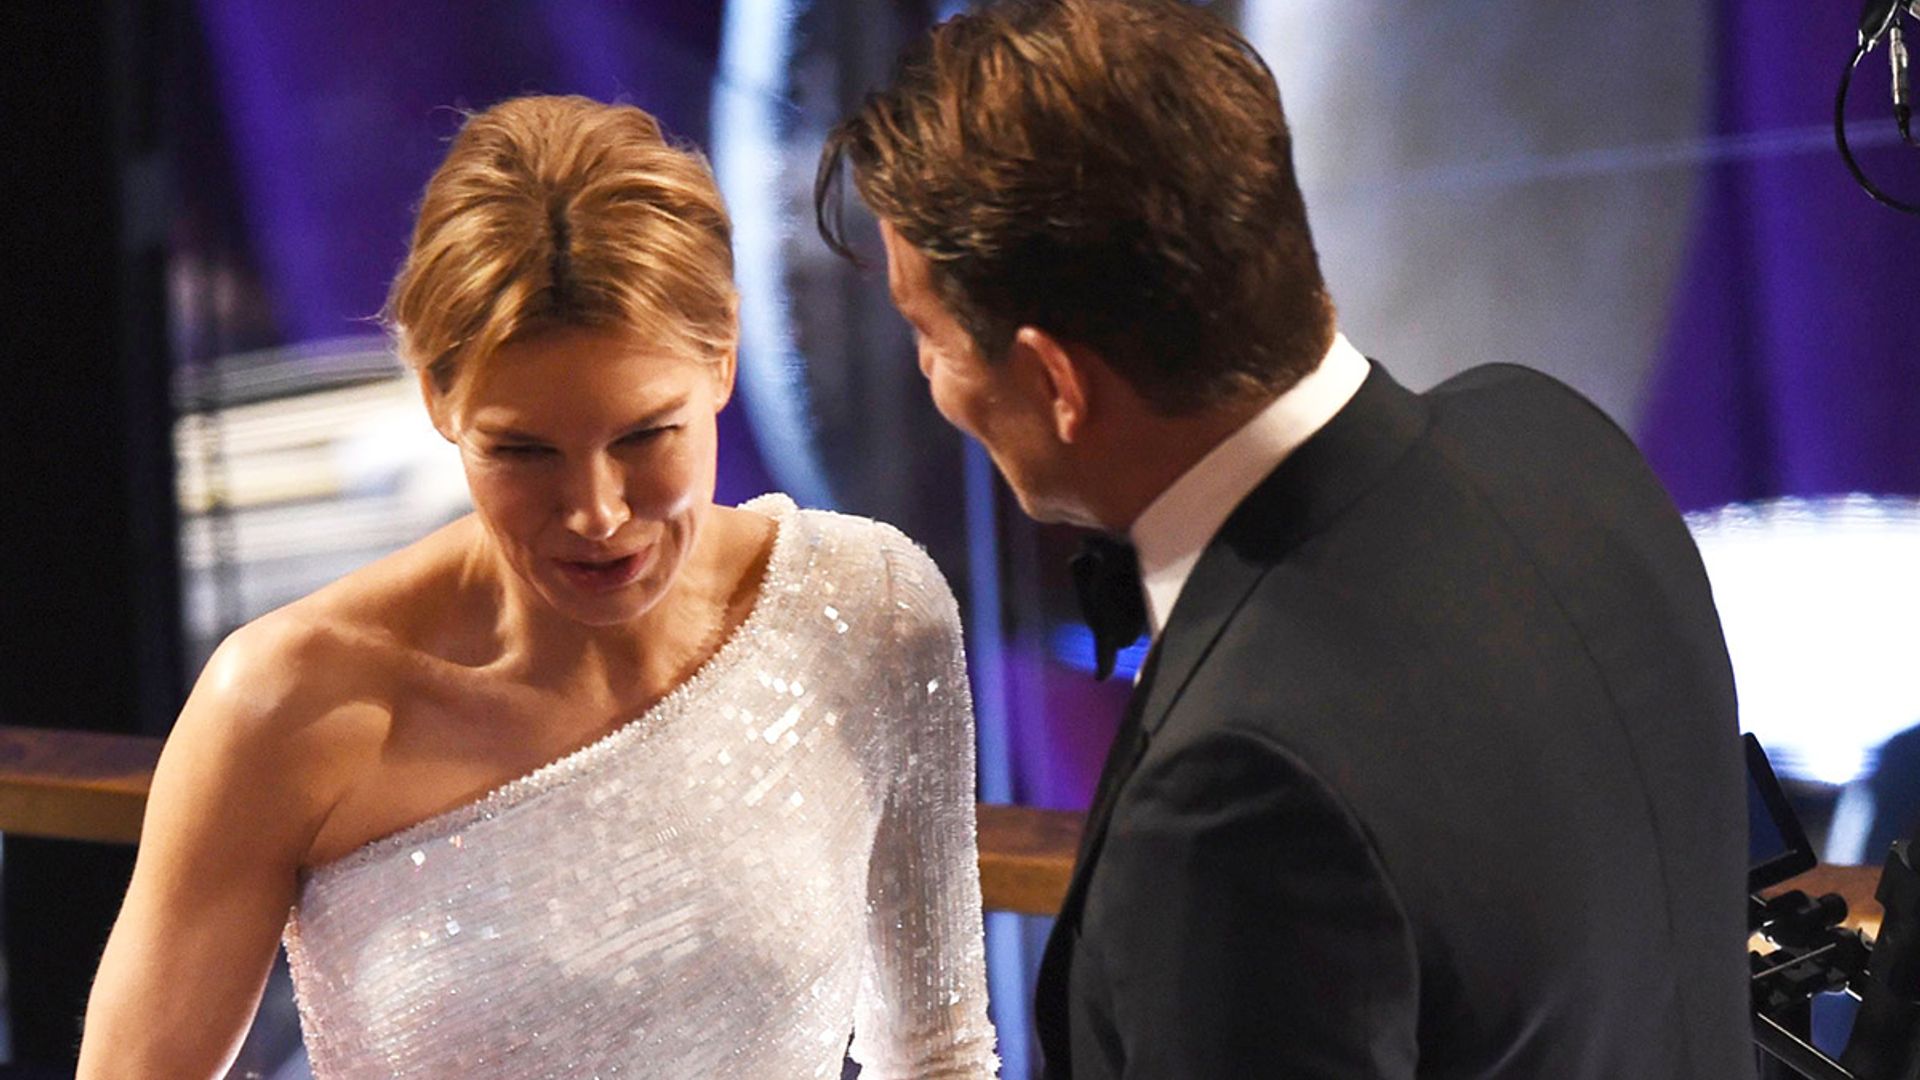 Renee Zellweger reunites with ex-boyfriend Bradley Cooper at 2020 Oscars